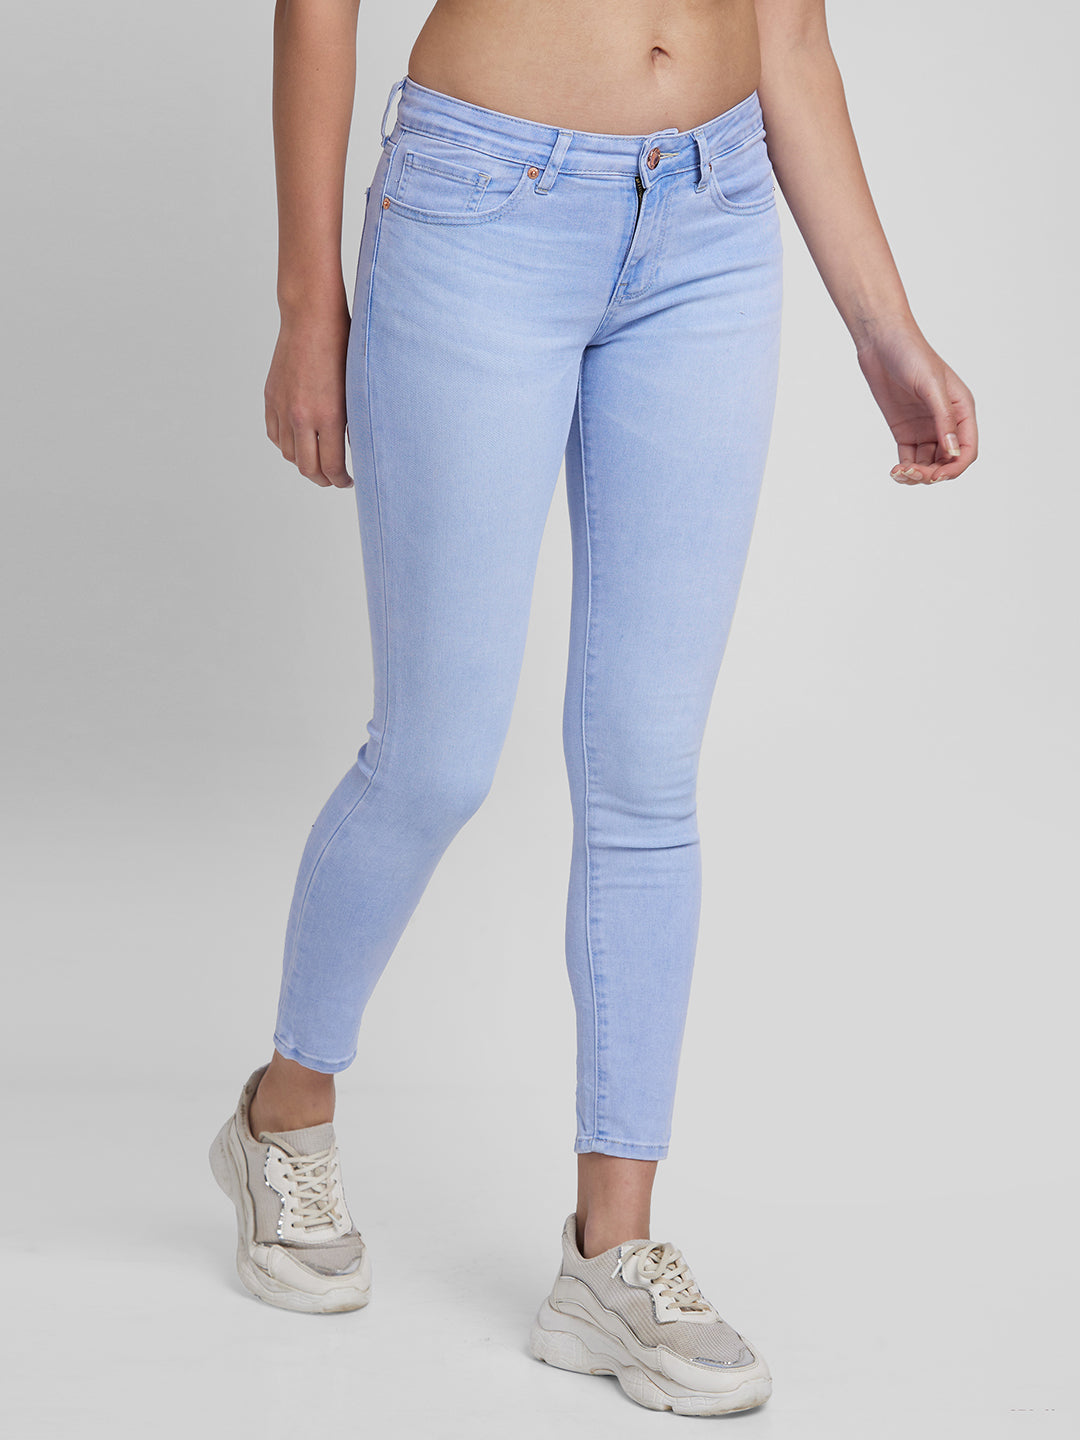 Spykar Women Light Blue Cotton Stretch Slim Fit Regular Length Jeans (Alicia)